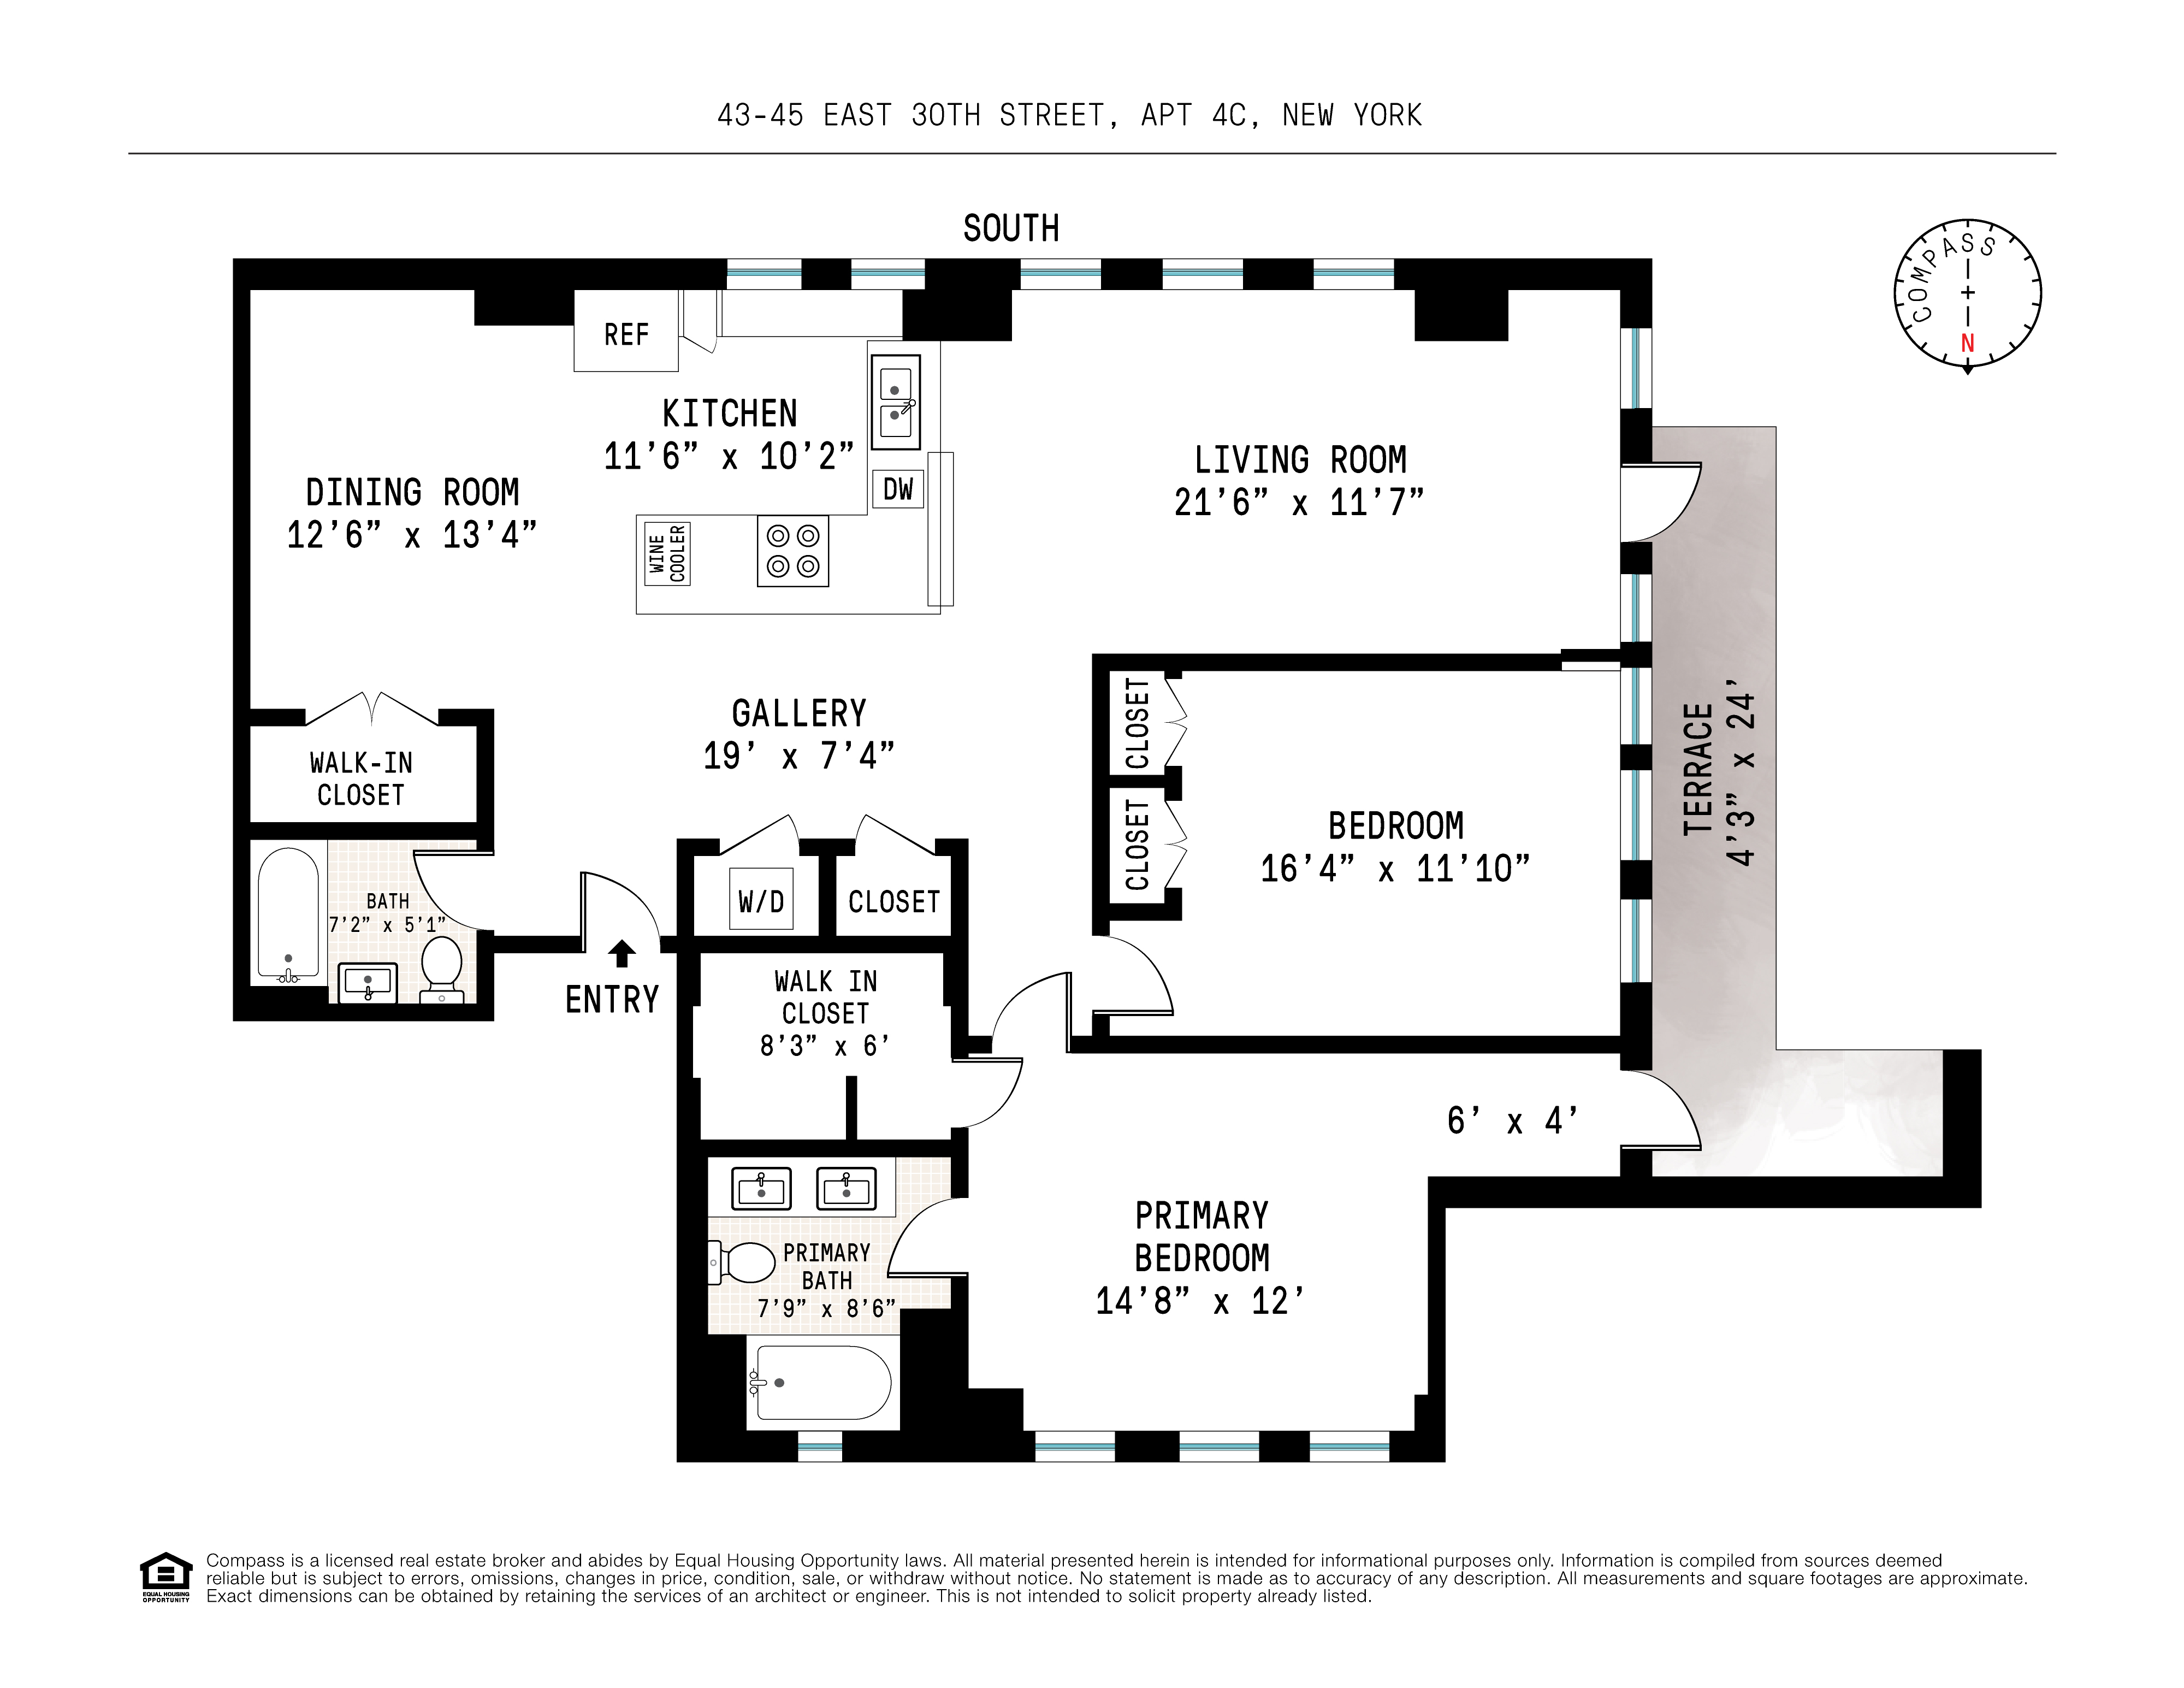 Floorplan for East 30th Street, 4C